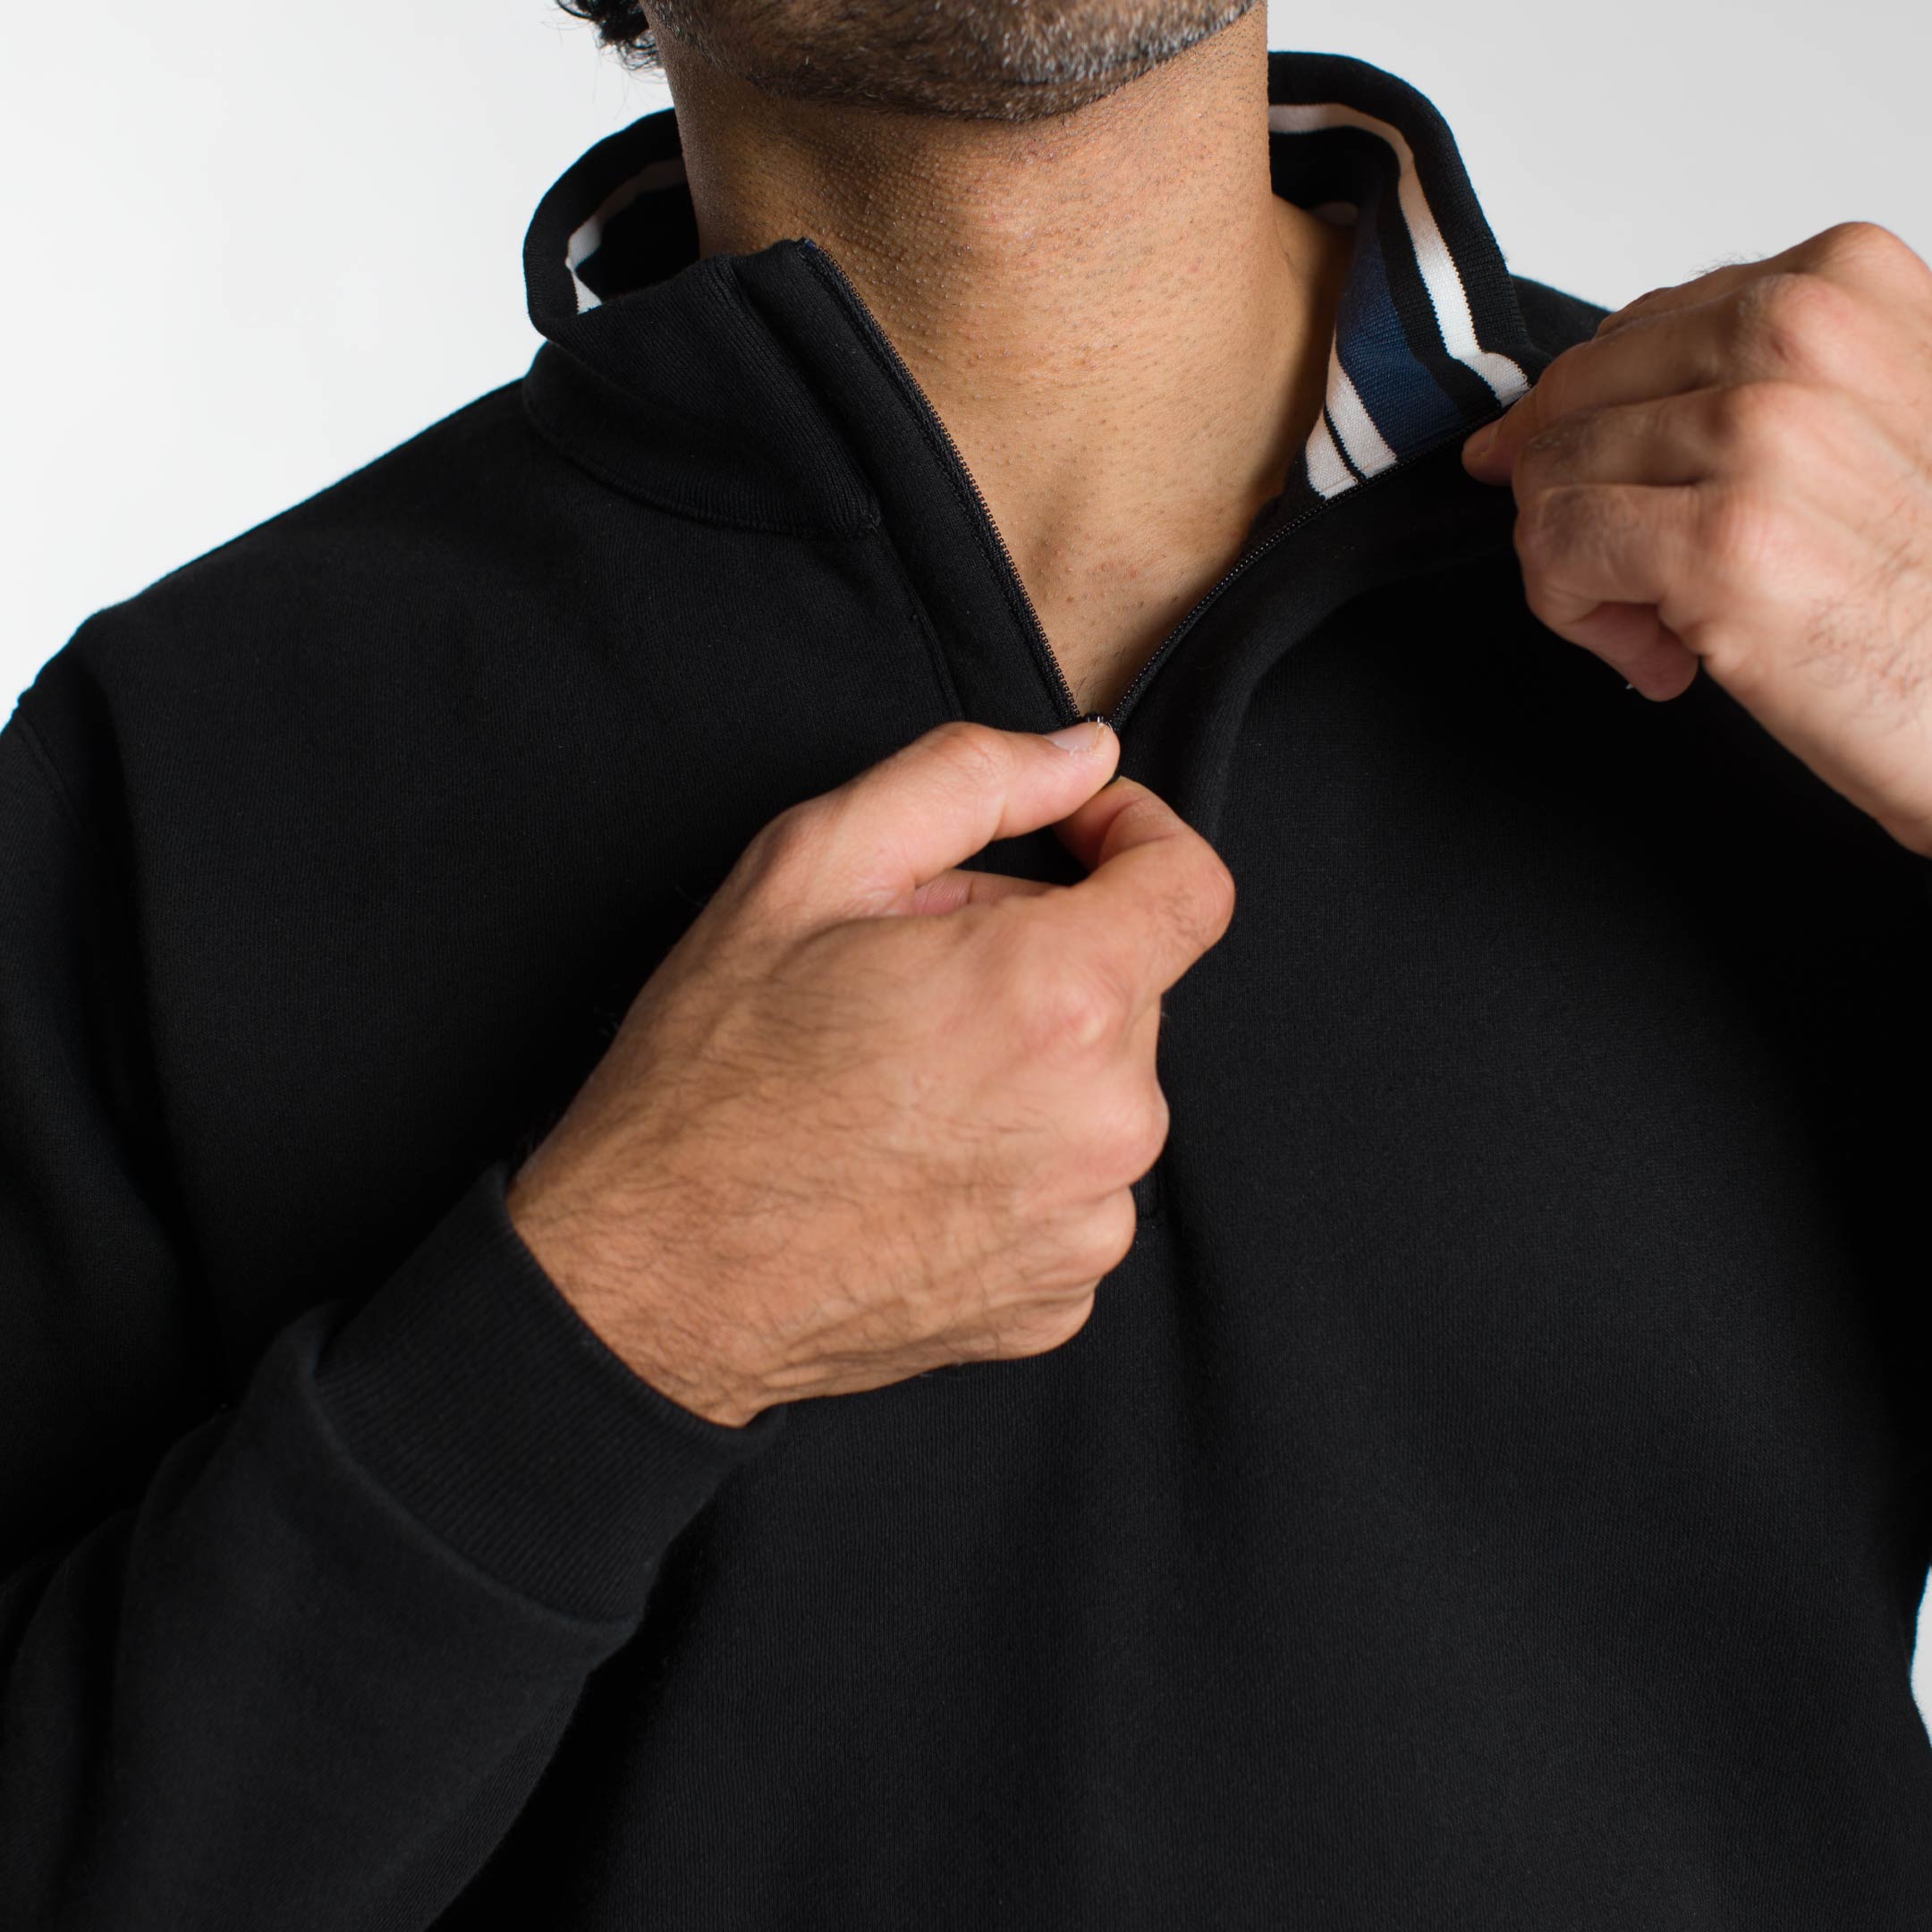 Ash & Erie Black Quarter-Zip Sweatshirt for Short Men   Sweater